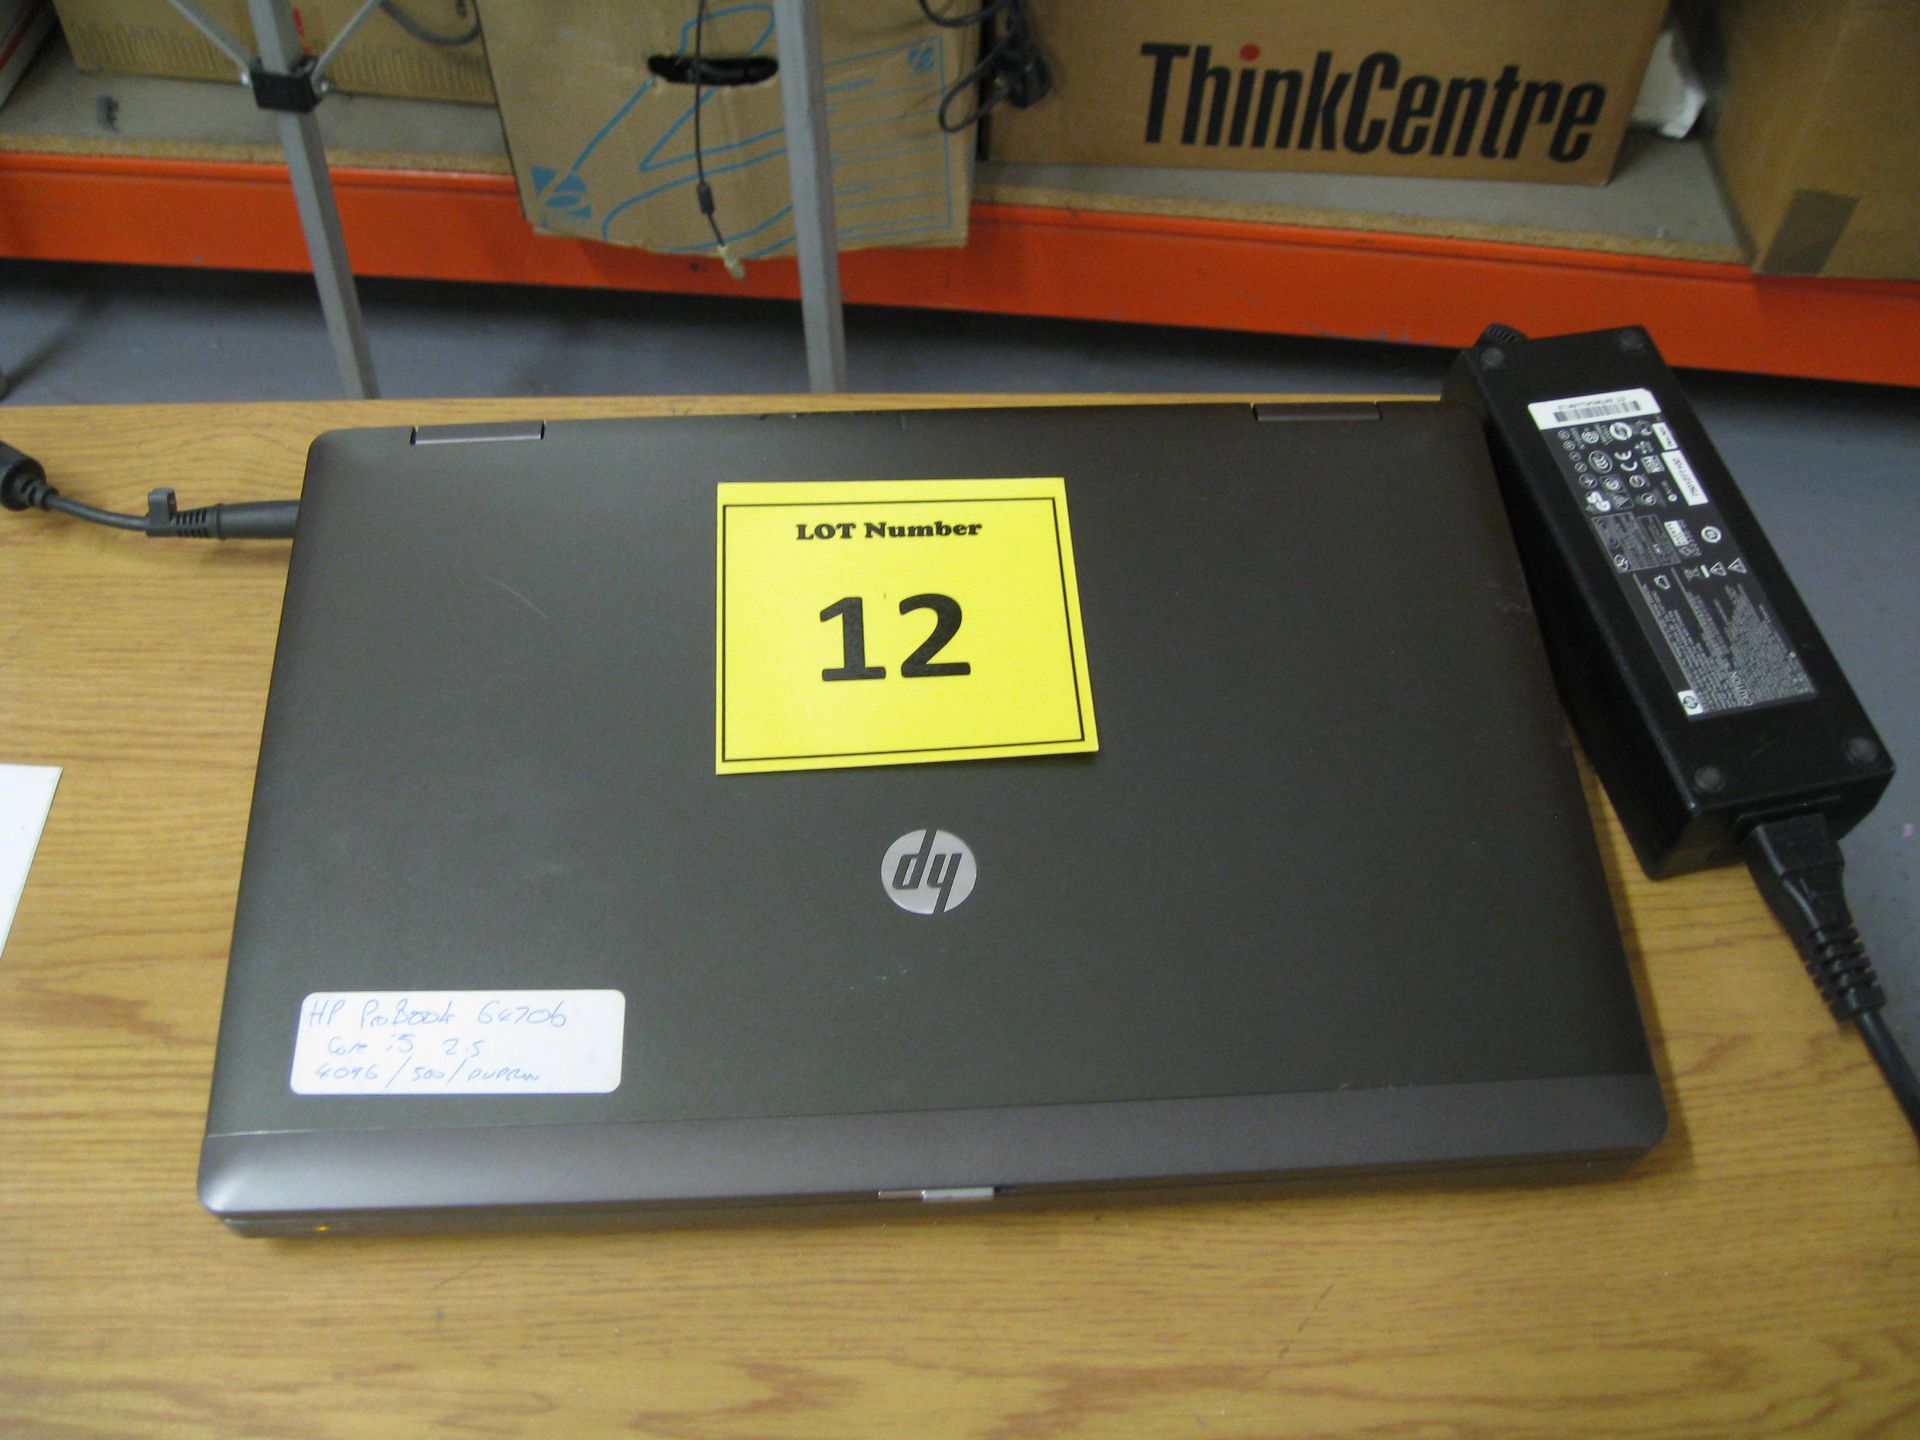 HP Probook 6470b Laptop, C-i5/2.50GHZ, 4GB RAM/320 GB HDD, dvdrw, psu - Win 7 Pro COA - Image 4 of 4